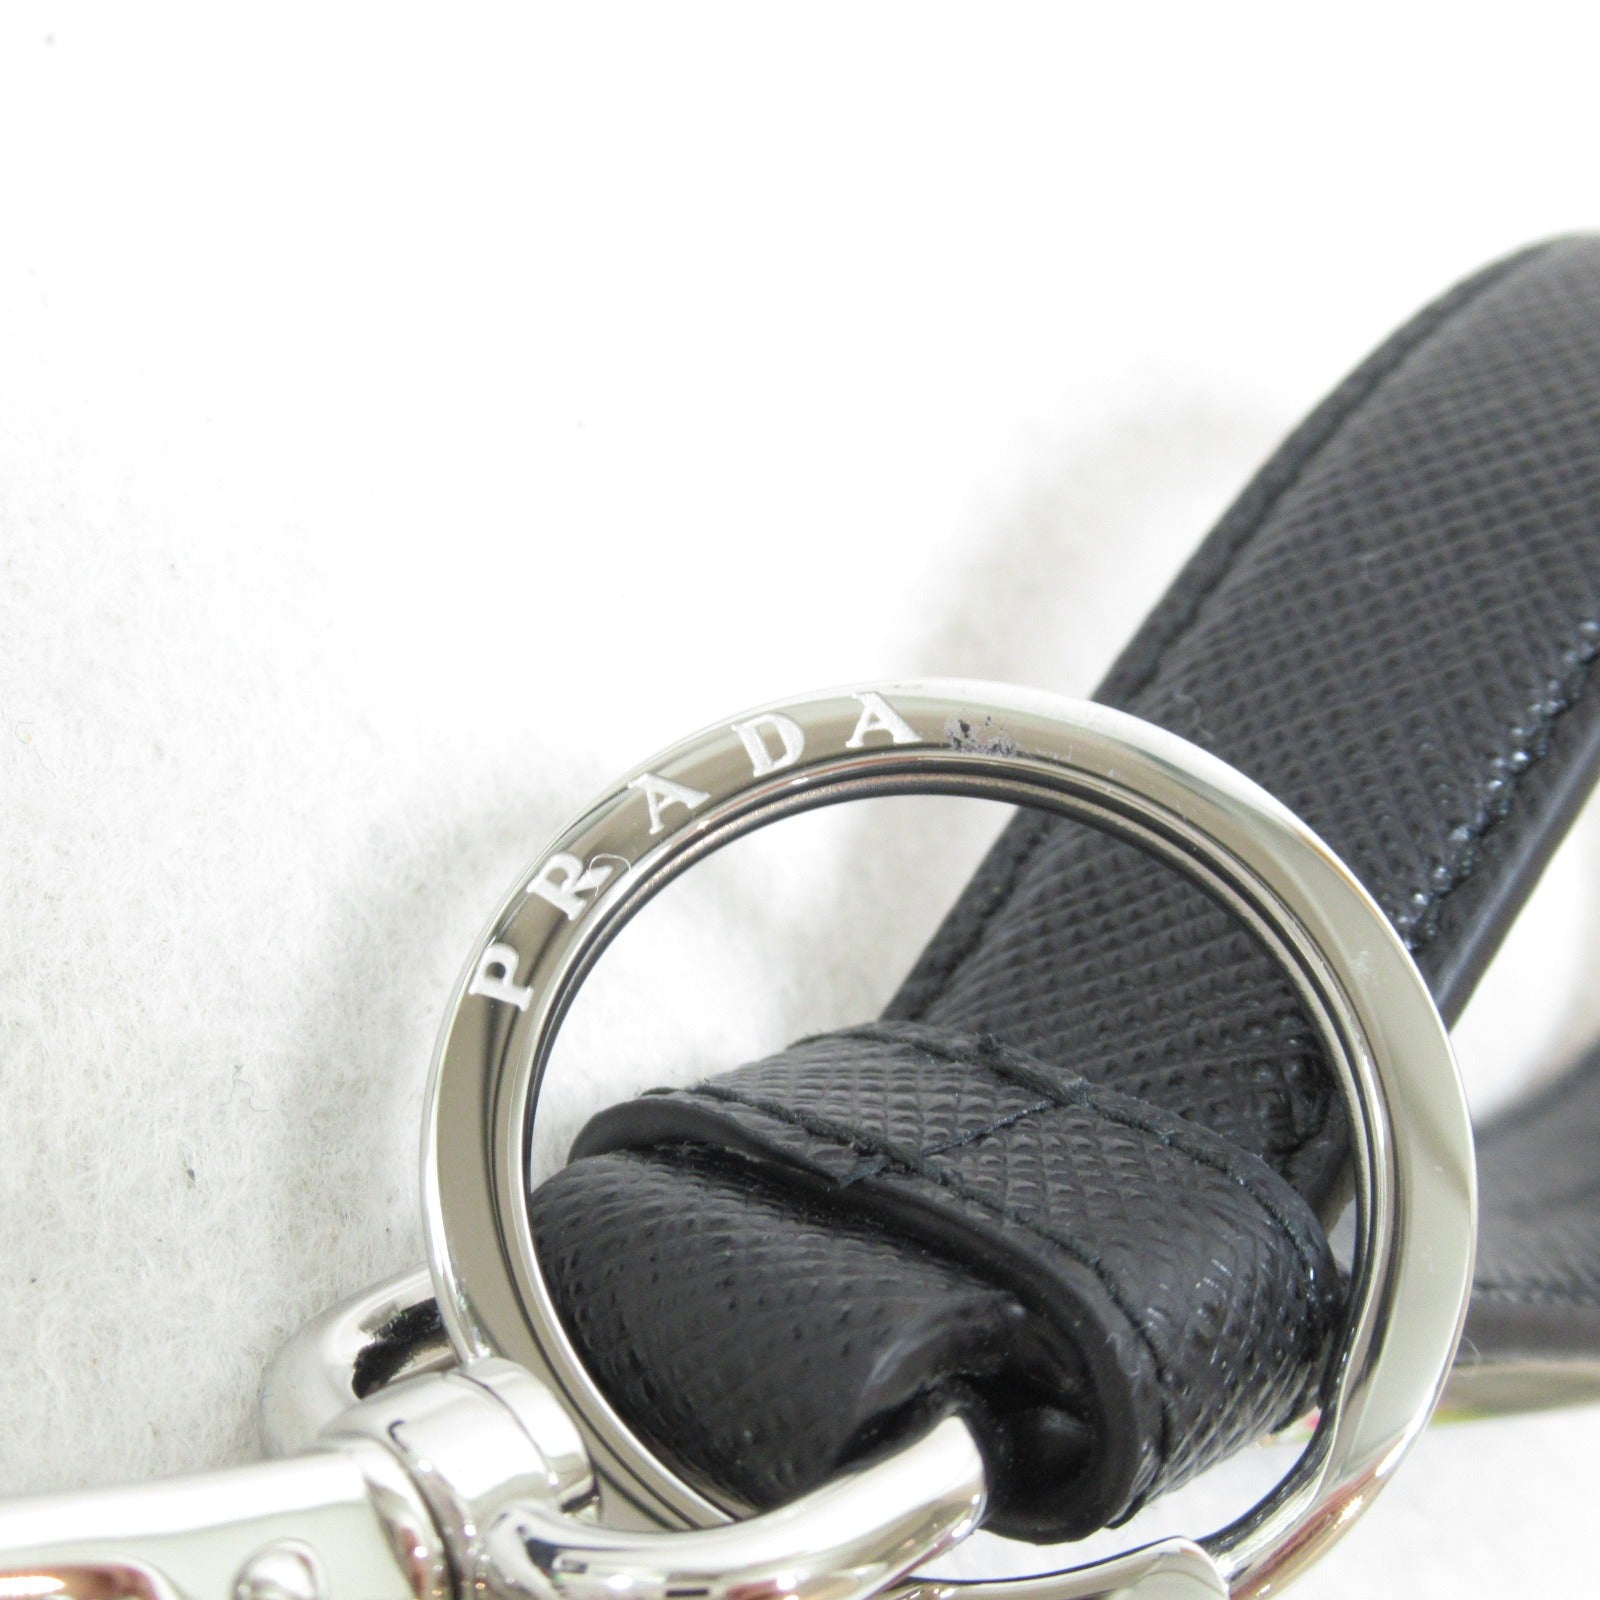 Prada Prada Keyring Keying Accessories Leather Sapphire   Nebi Nero 2PP709053F0002